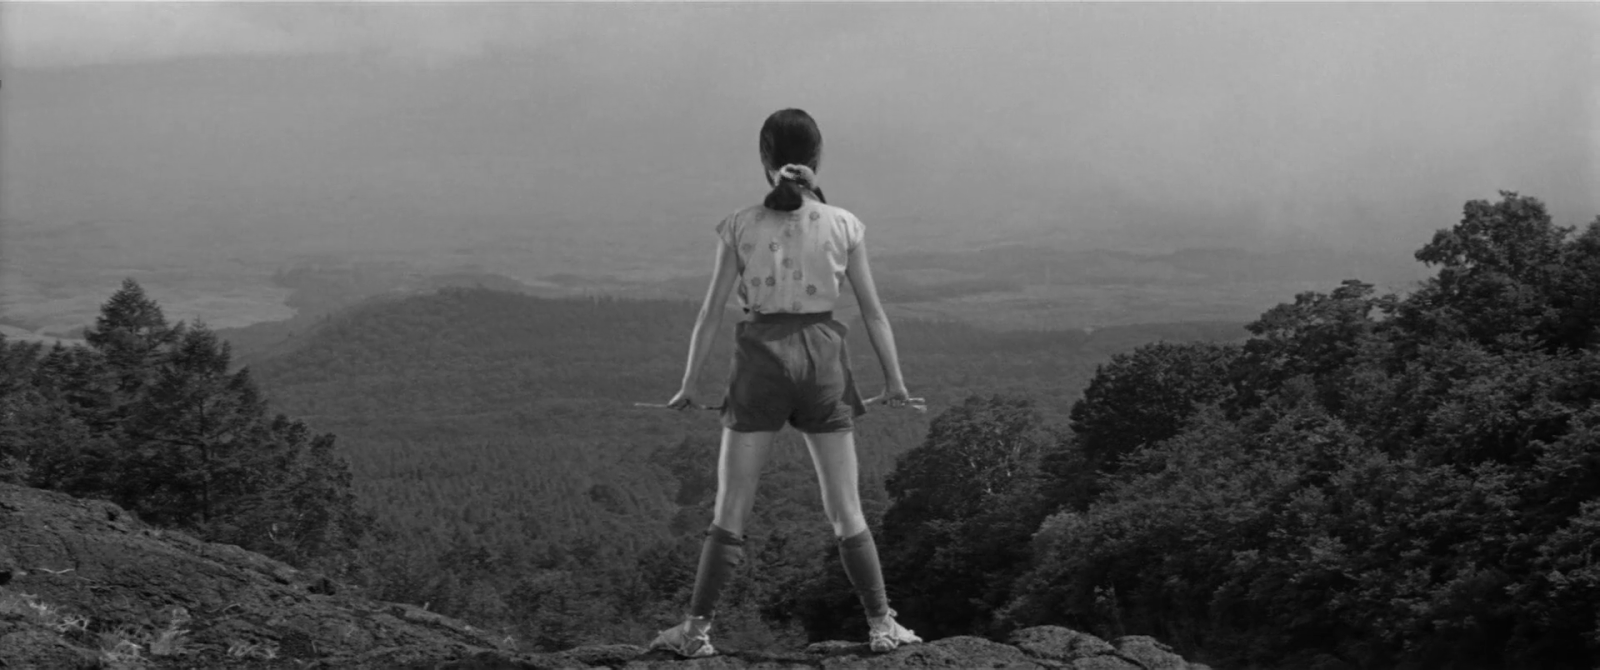 La Forteresse cachée : Critique du film d'aventure d'Akira Kurosawa.